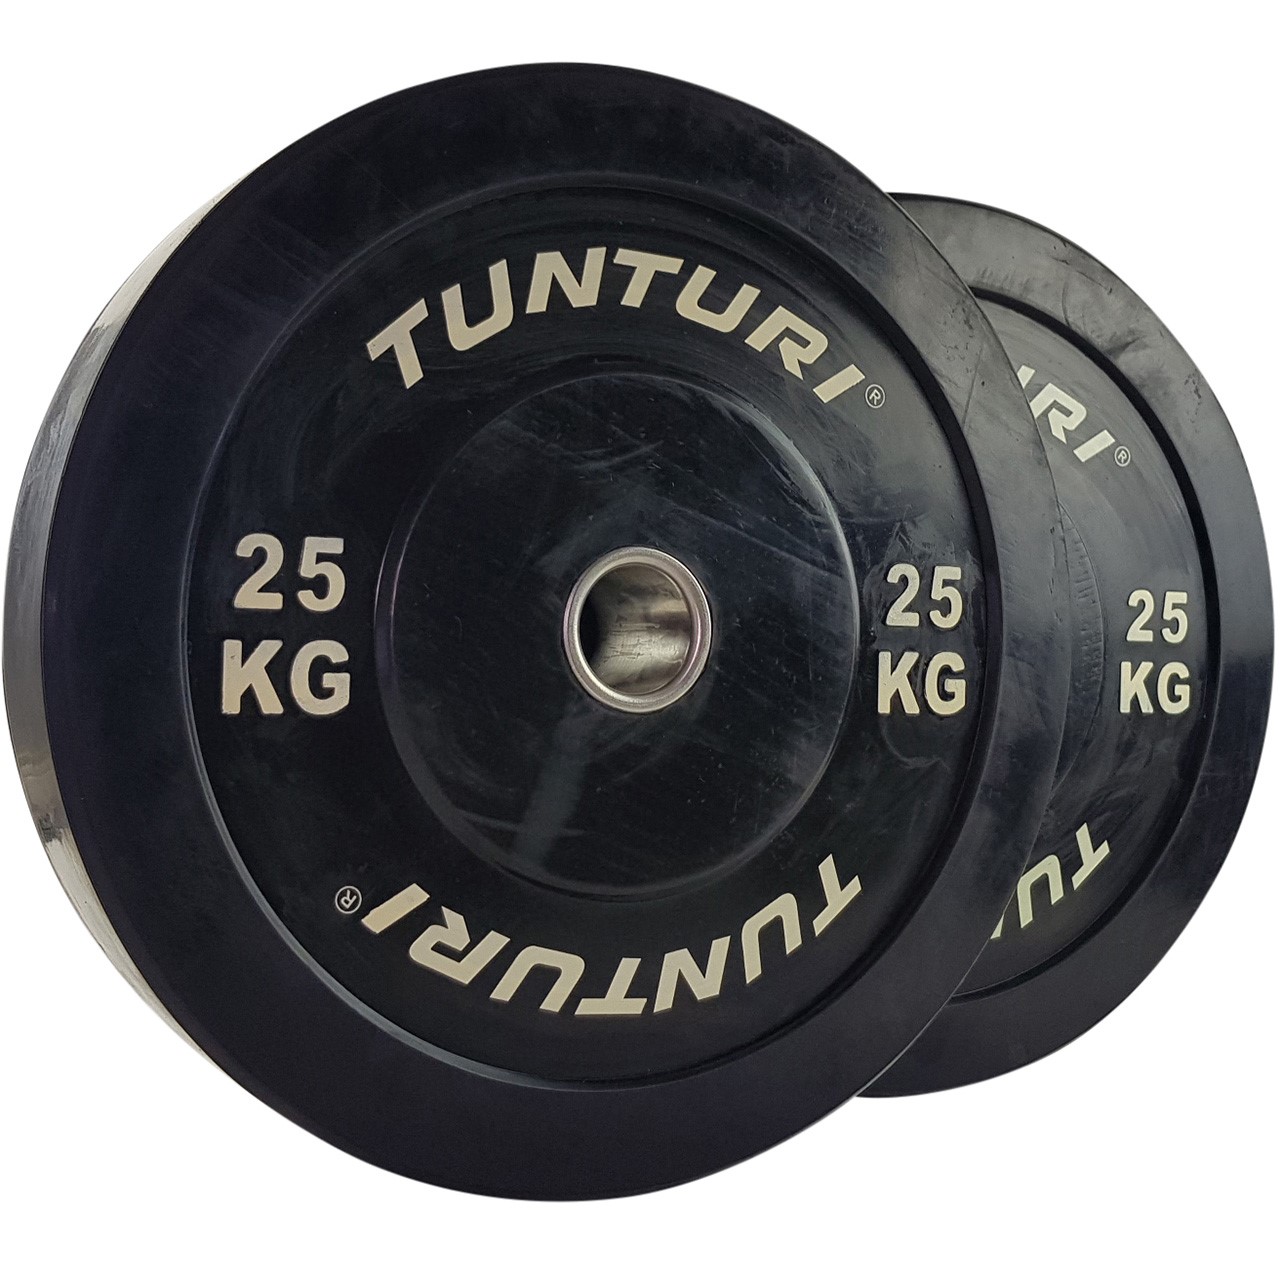 Tunturi Bumper Plate Hantelscheiben 50 mm 25 kg